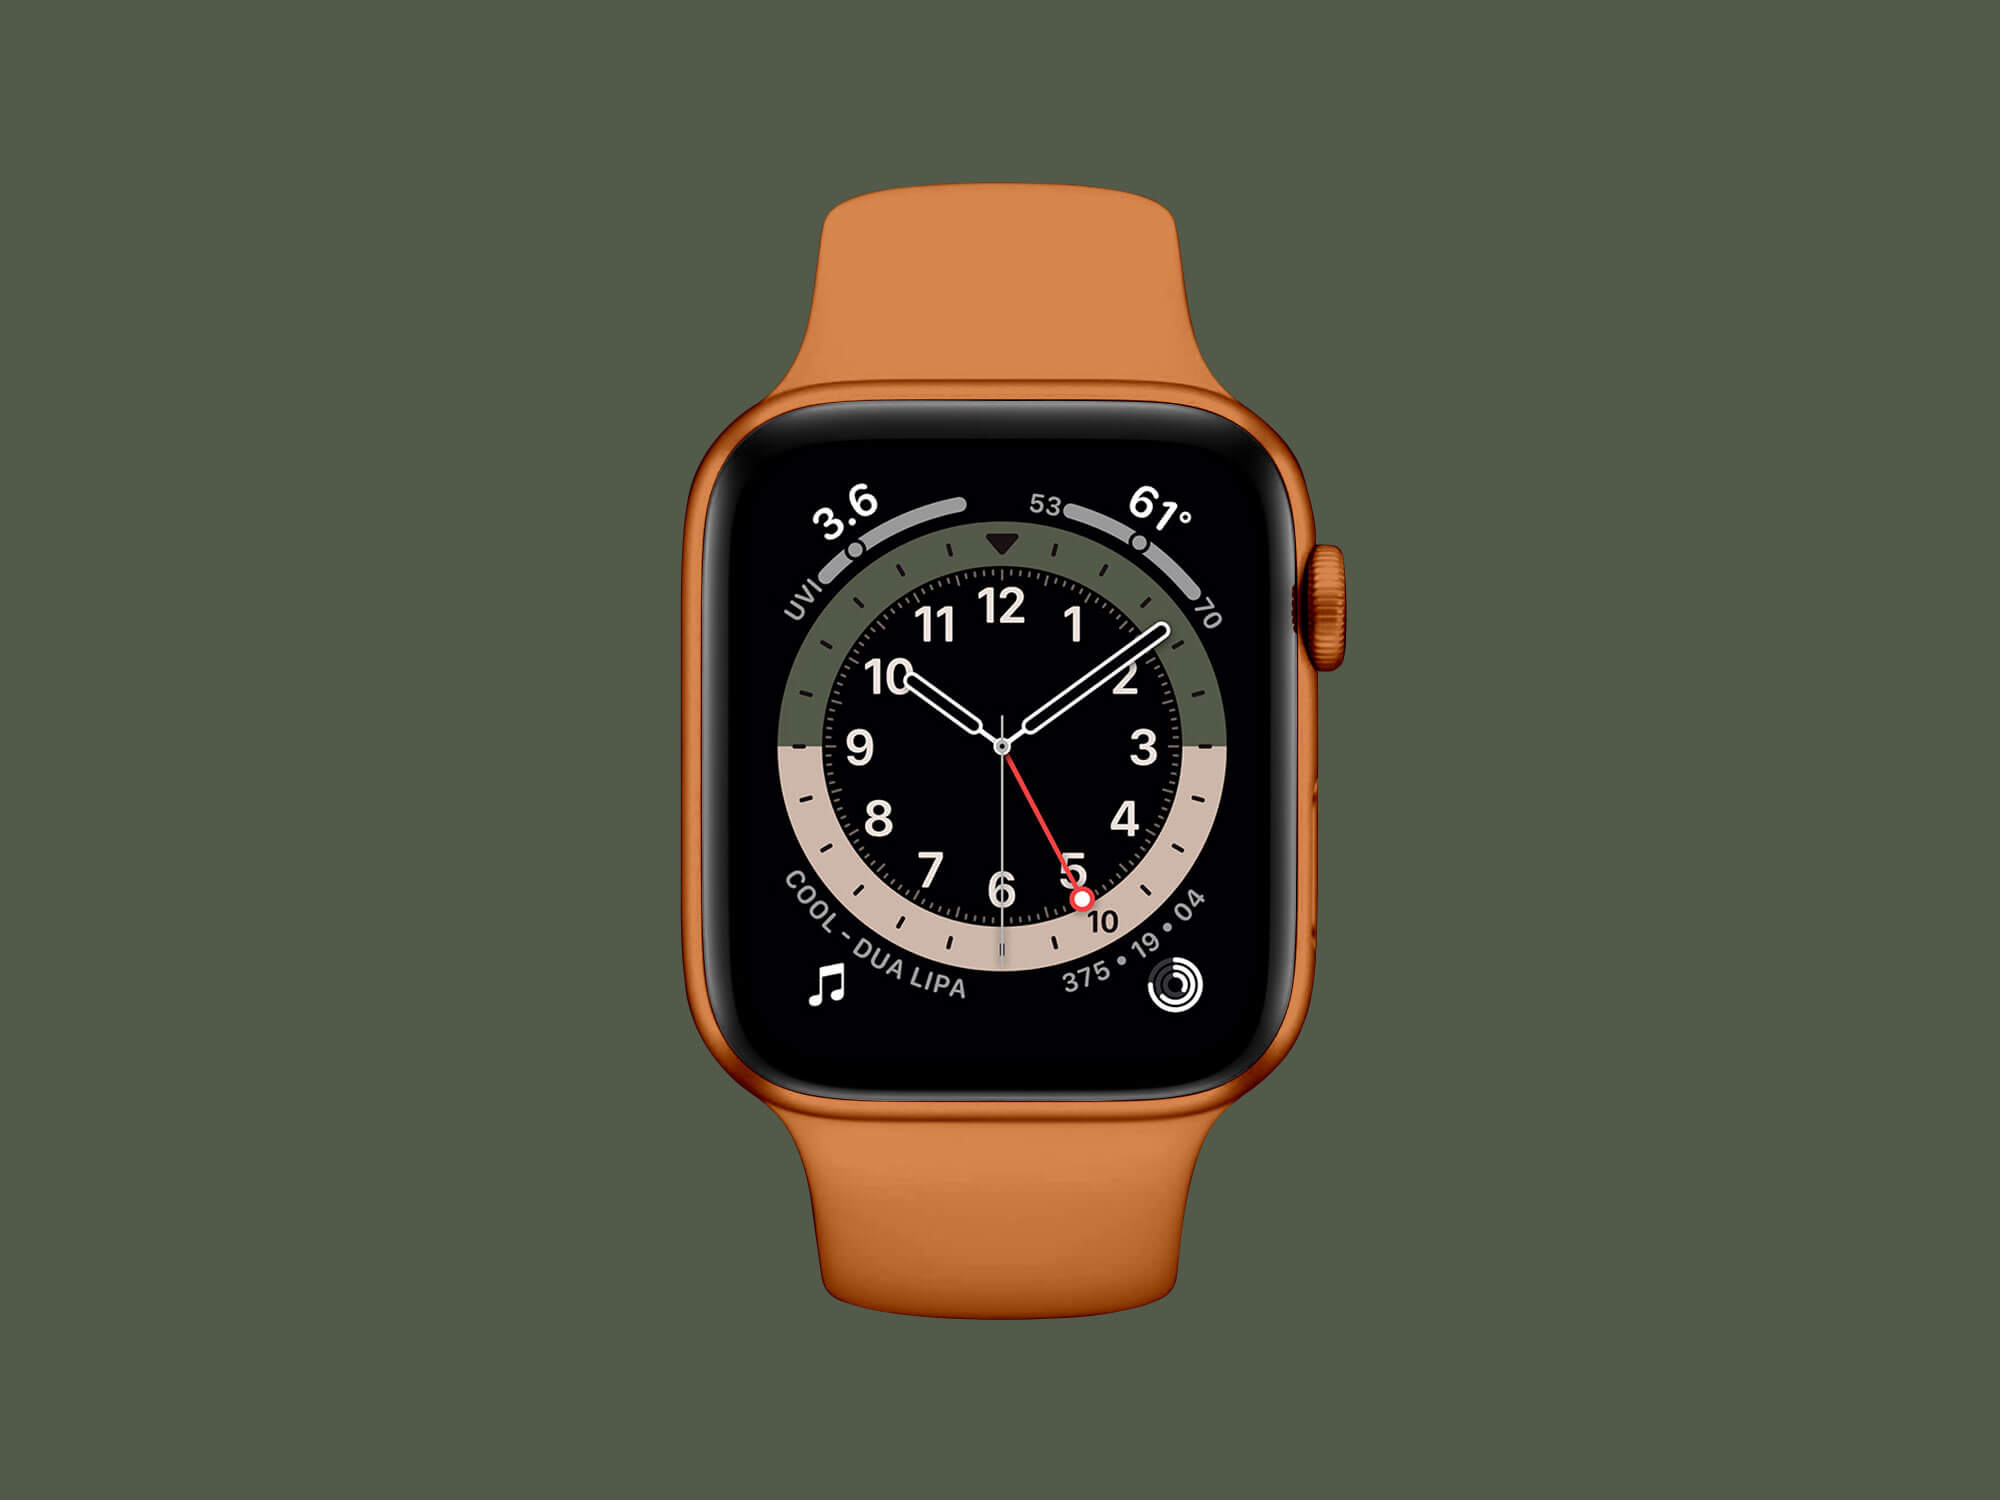 高质量橙色Apple Watch Series 6 .psd样机模型Mockup